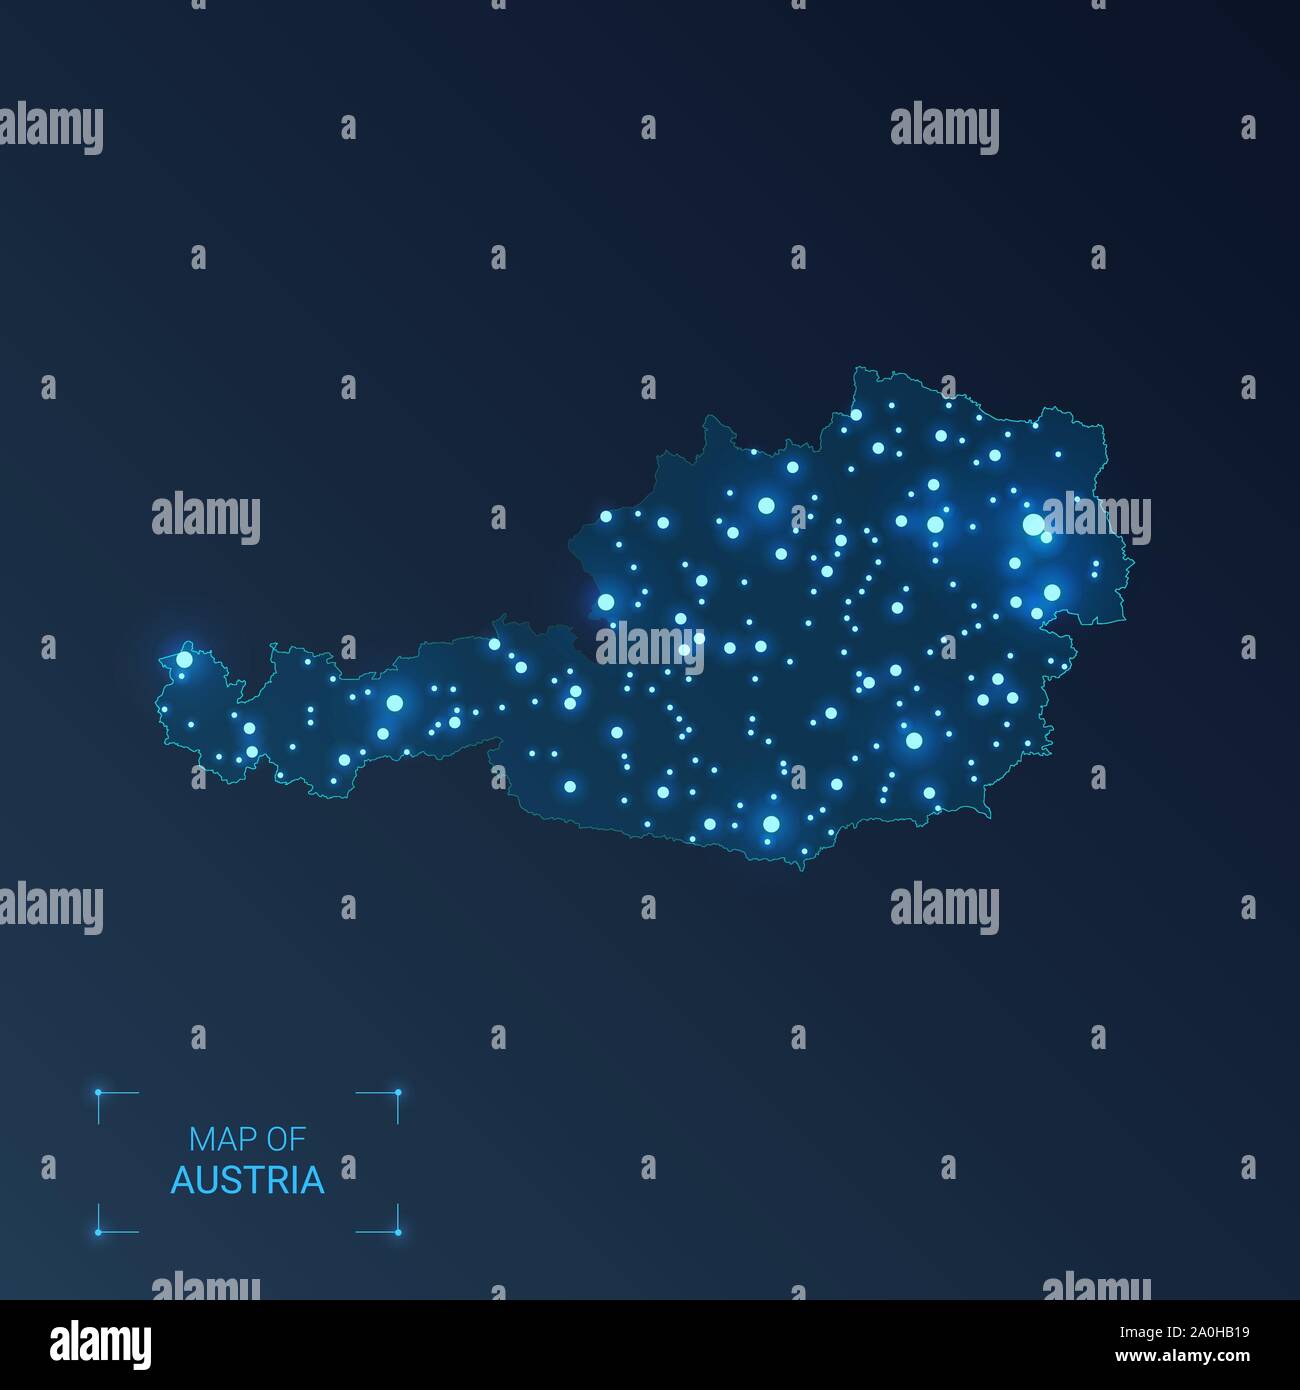 Austria map with cities. Luminous dots - neon lights on dark background. Vector illustration. Stock Vector